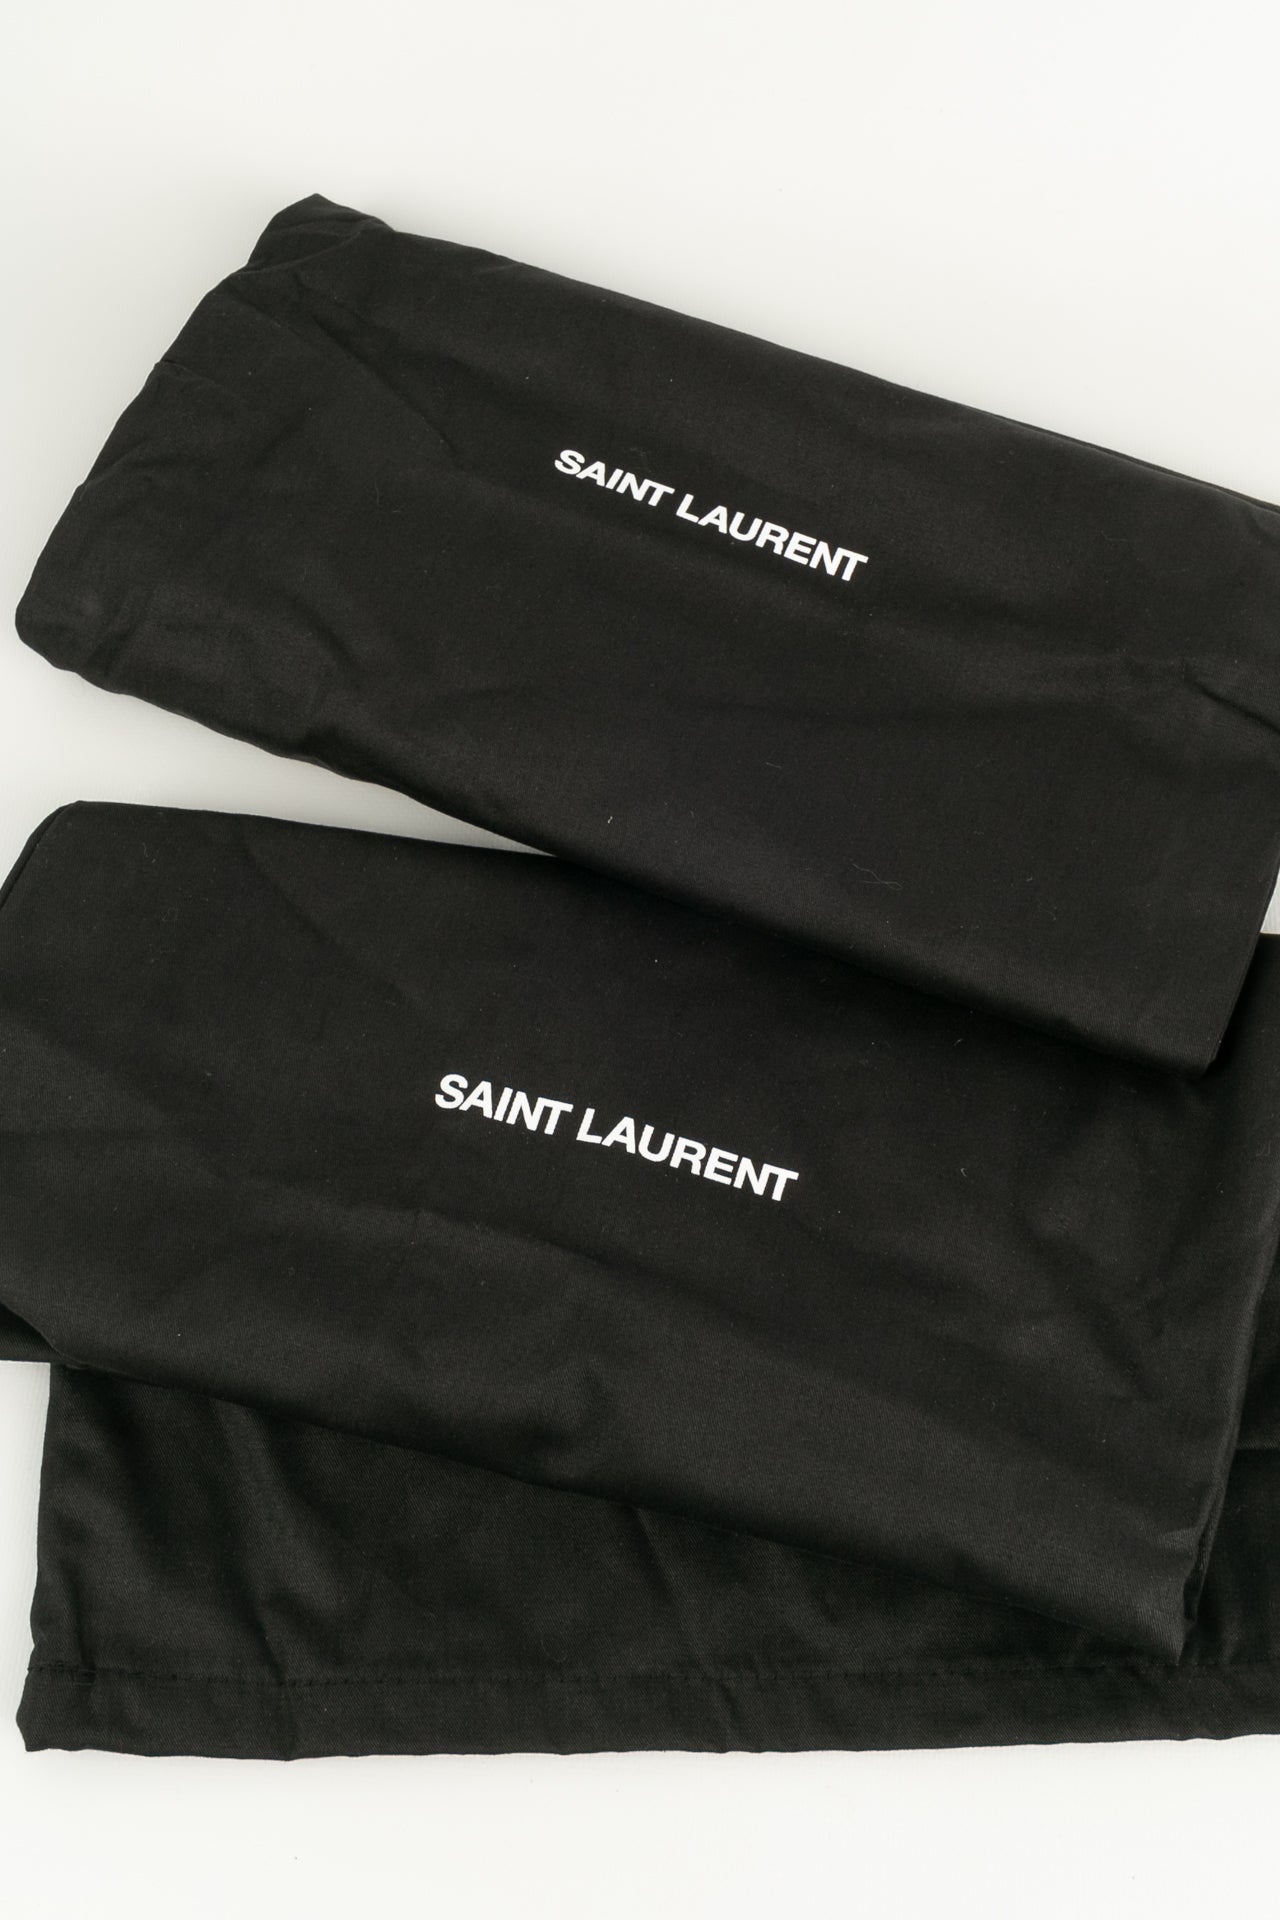 Saint Laurent sunglass real vs fake. How to spot fake Yves Saint